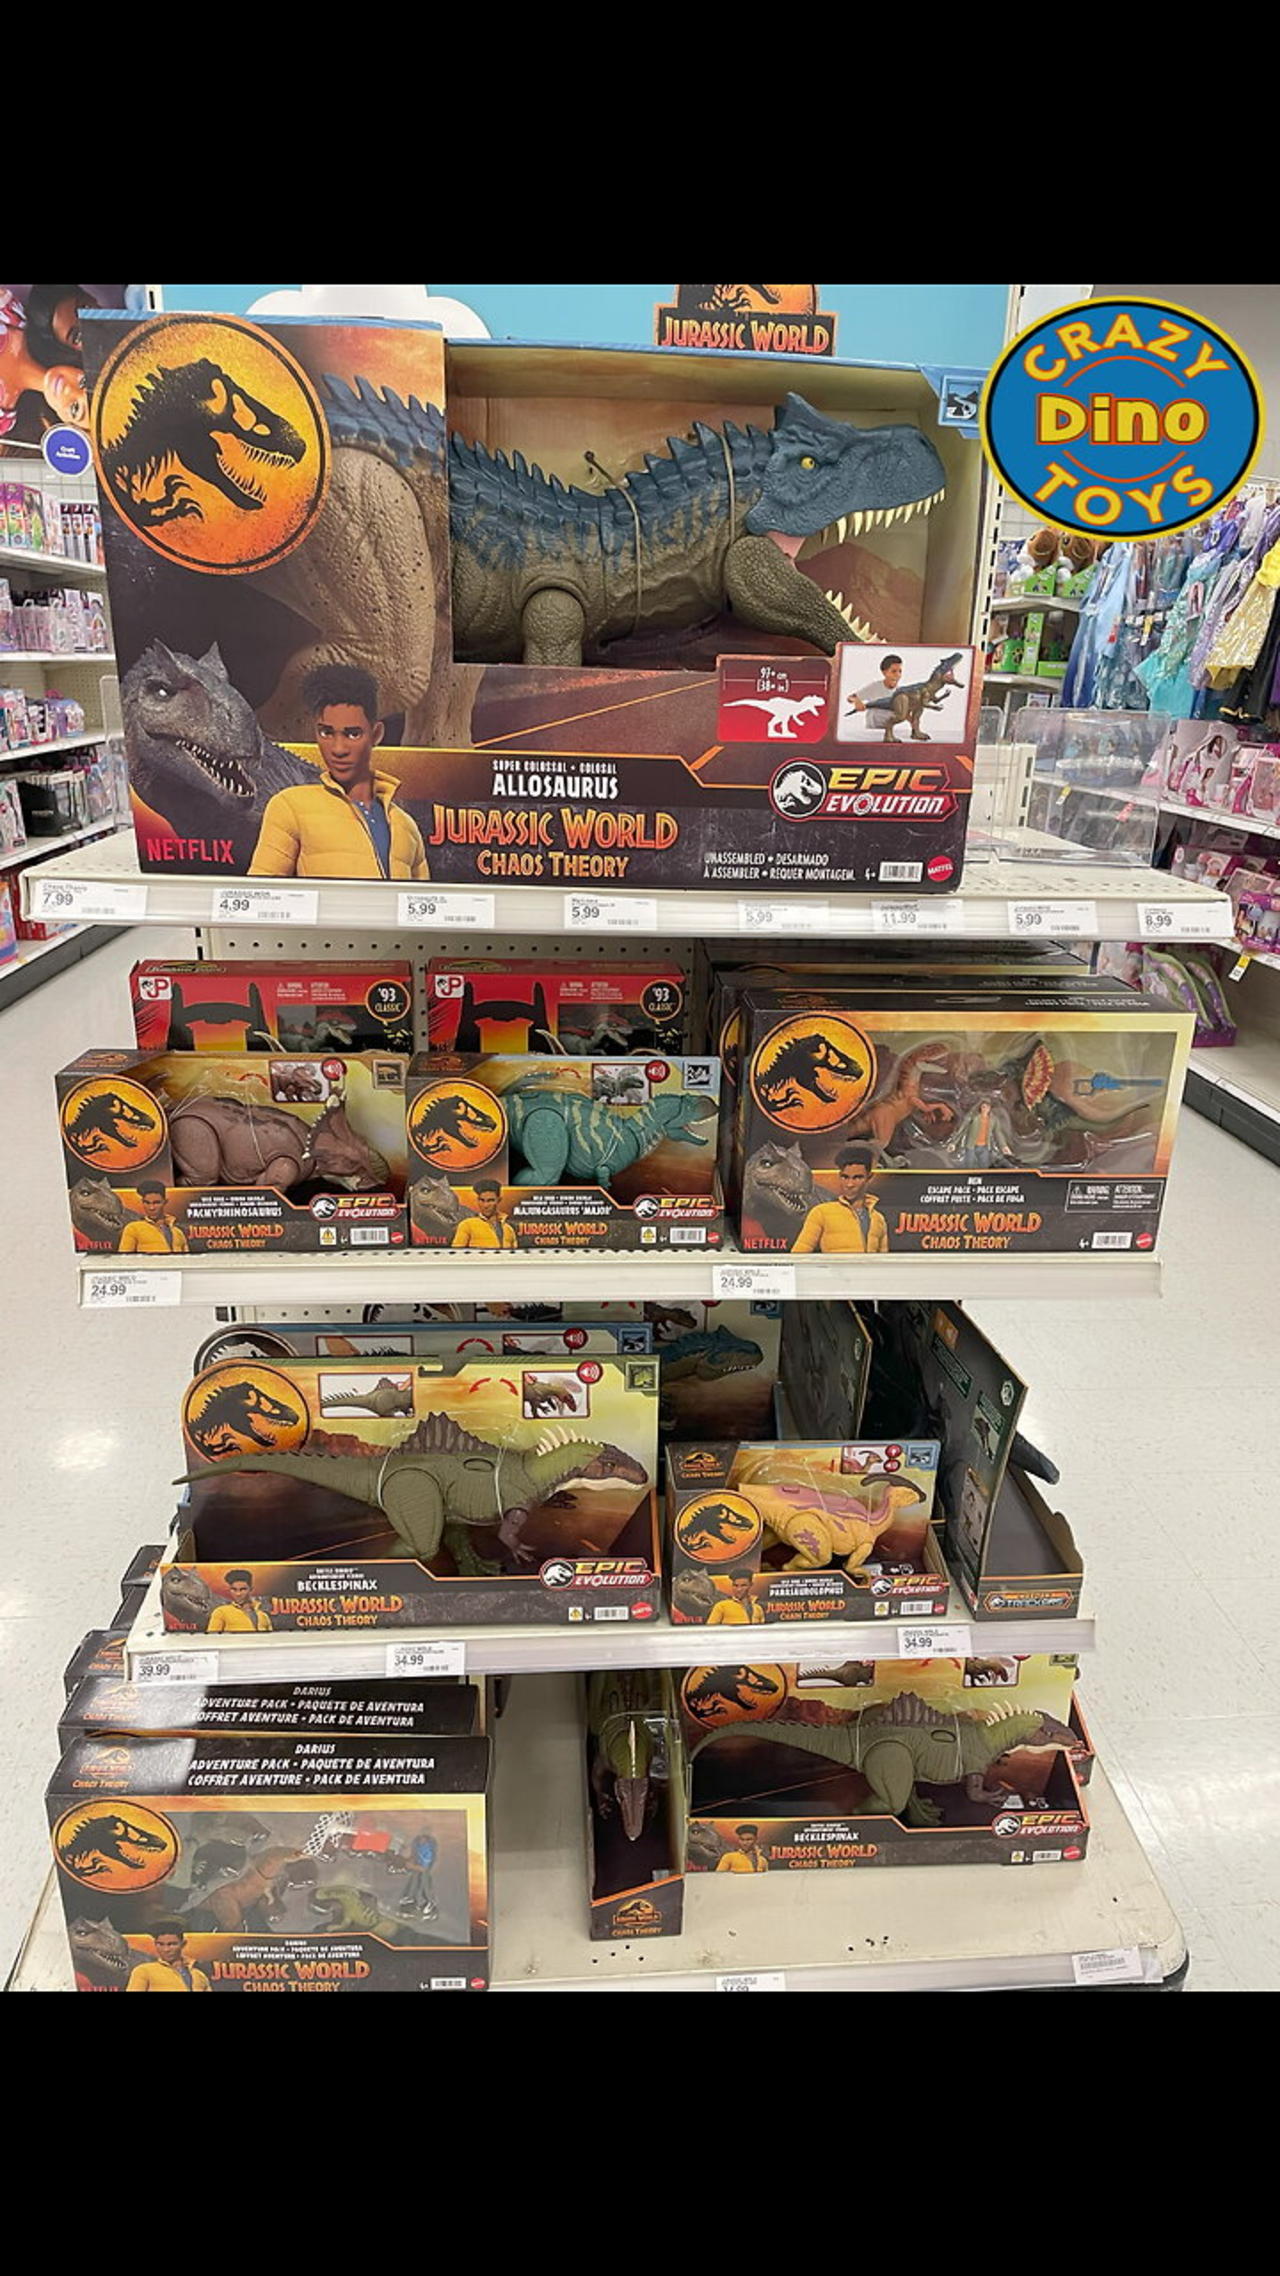 New Jurassic World Chaos Theory Dinosaur Toys Shopping Spree @Target Camp Cretaceous #shorts #dino